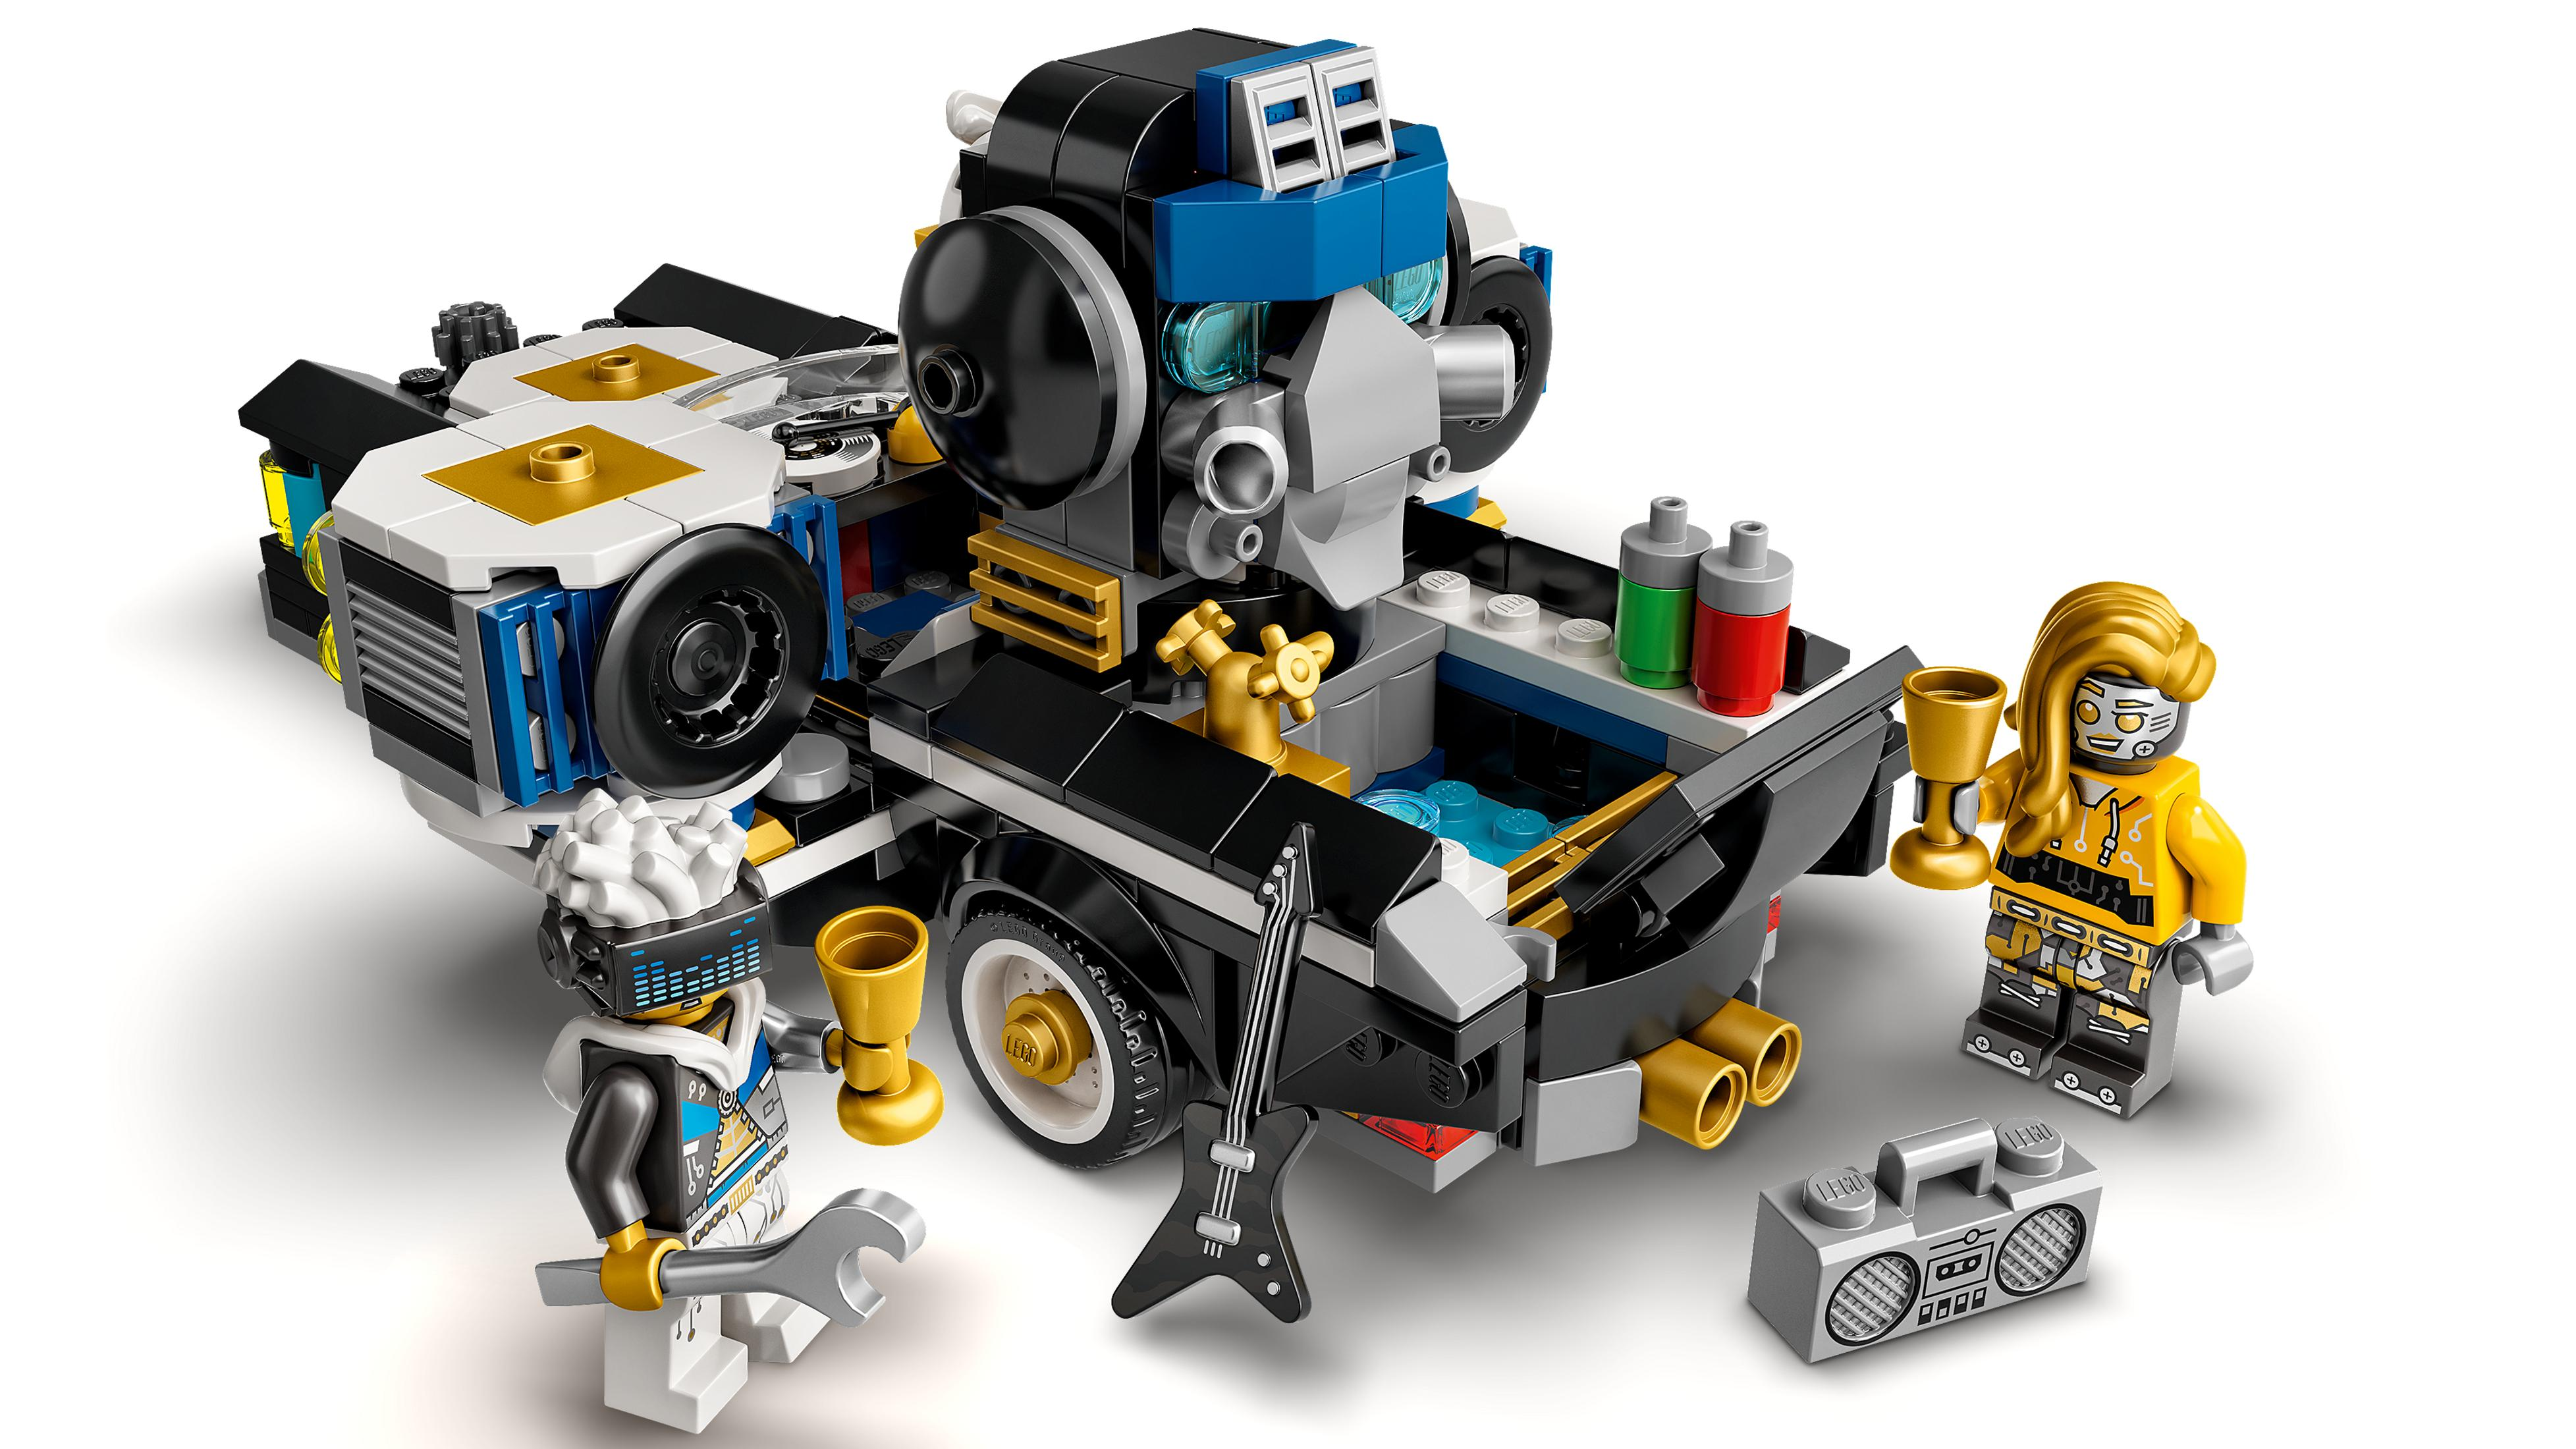 LEGO 43112 Bausatz, Mehrfarbig HIPHOP CAR ROBO